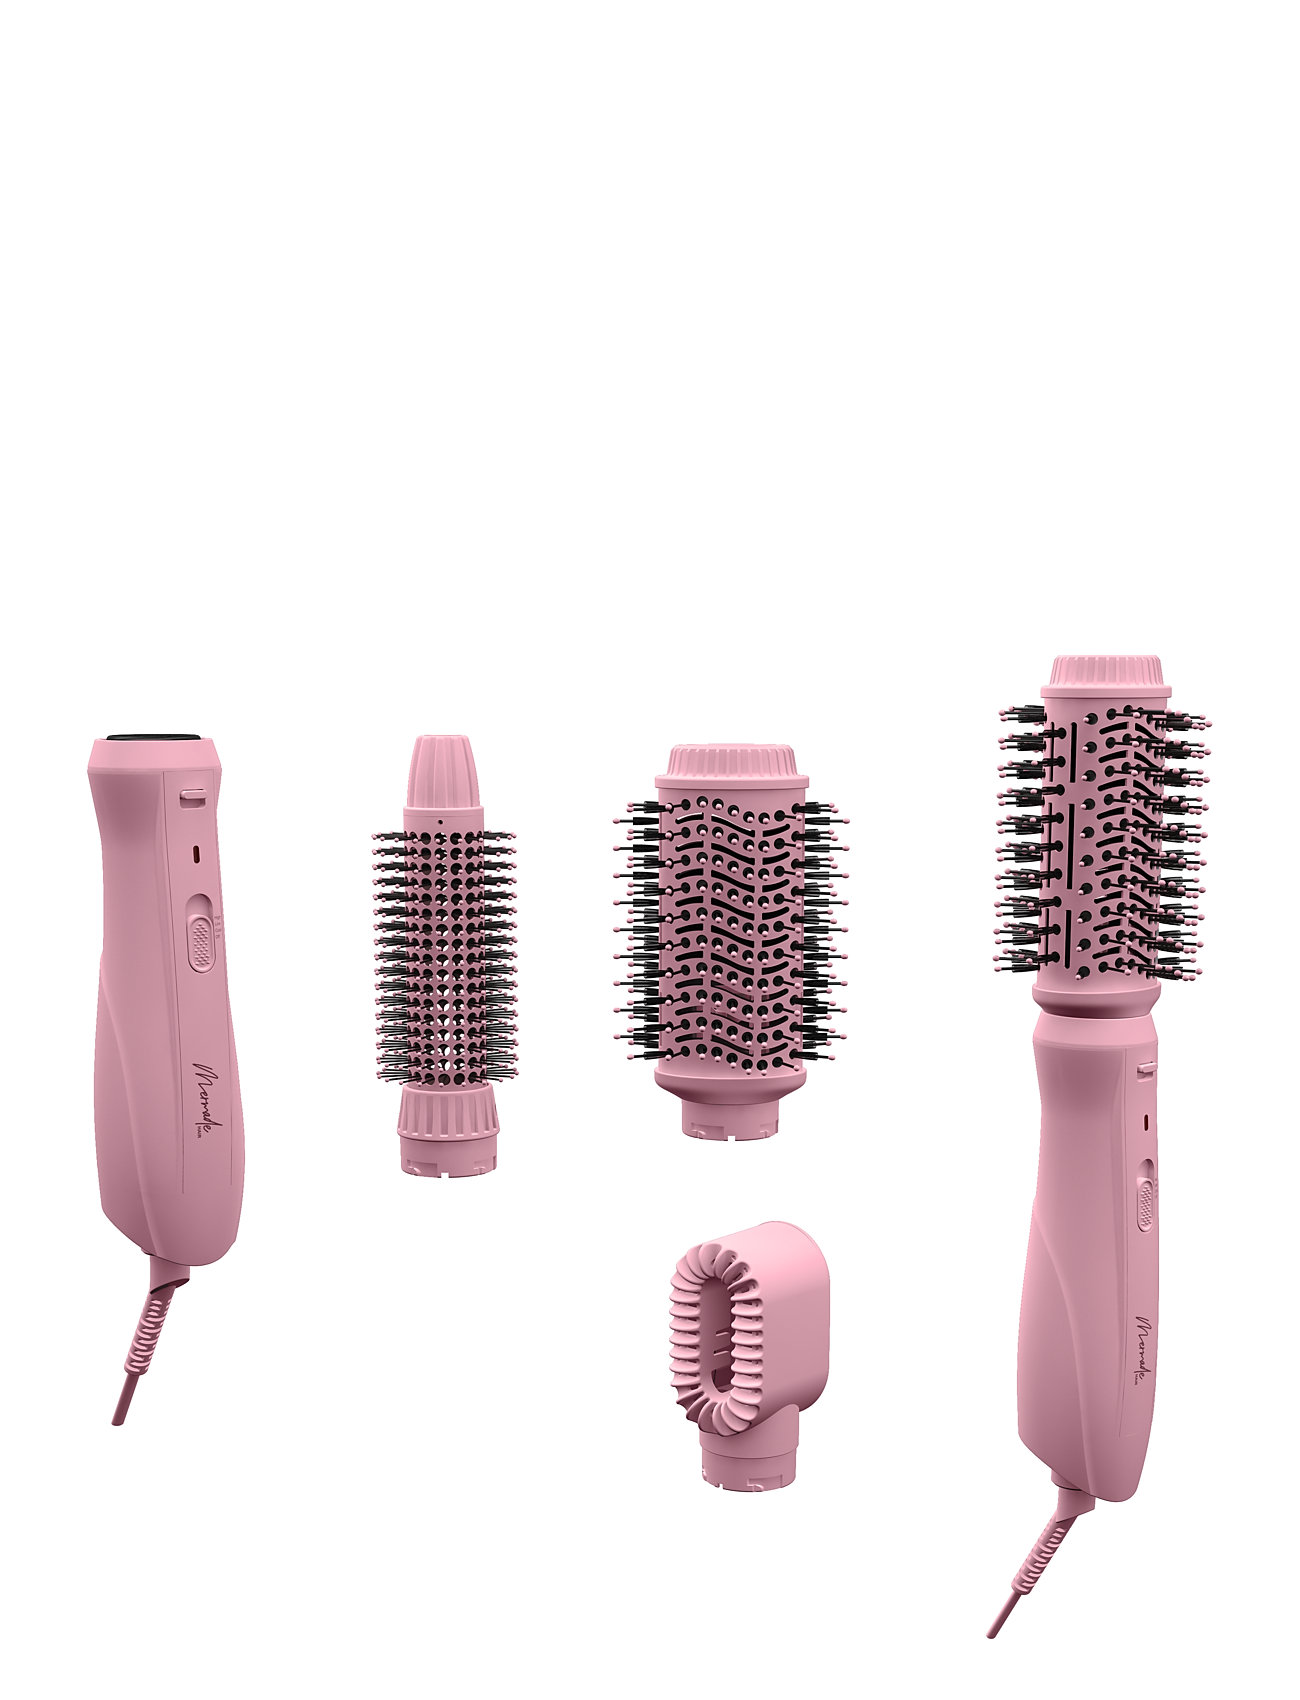 The Interchangable Blow Dry Brush Beauty Women Hair Tools Heat Brushes Pink Mermade Hair